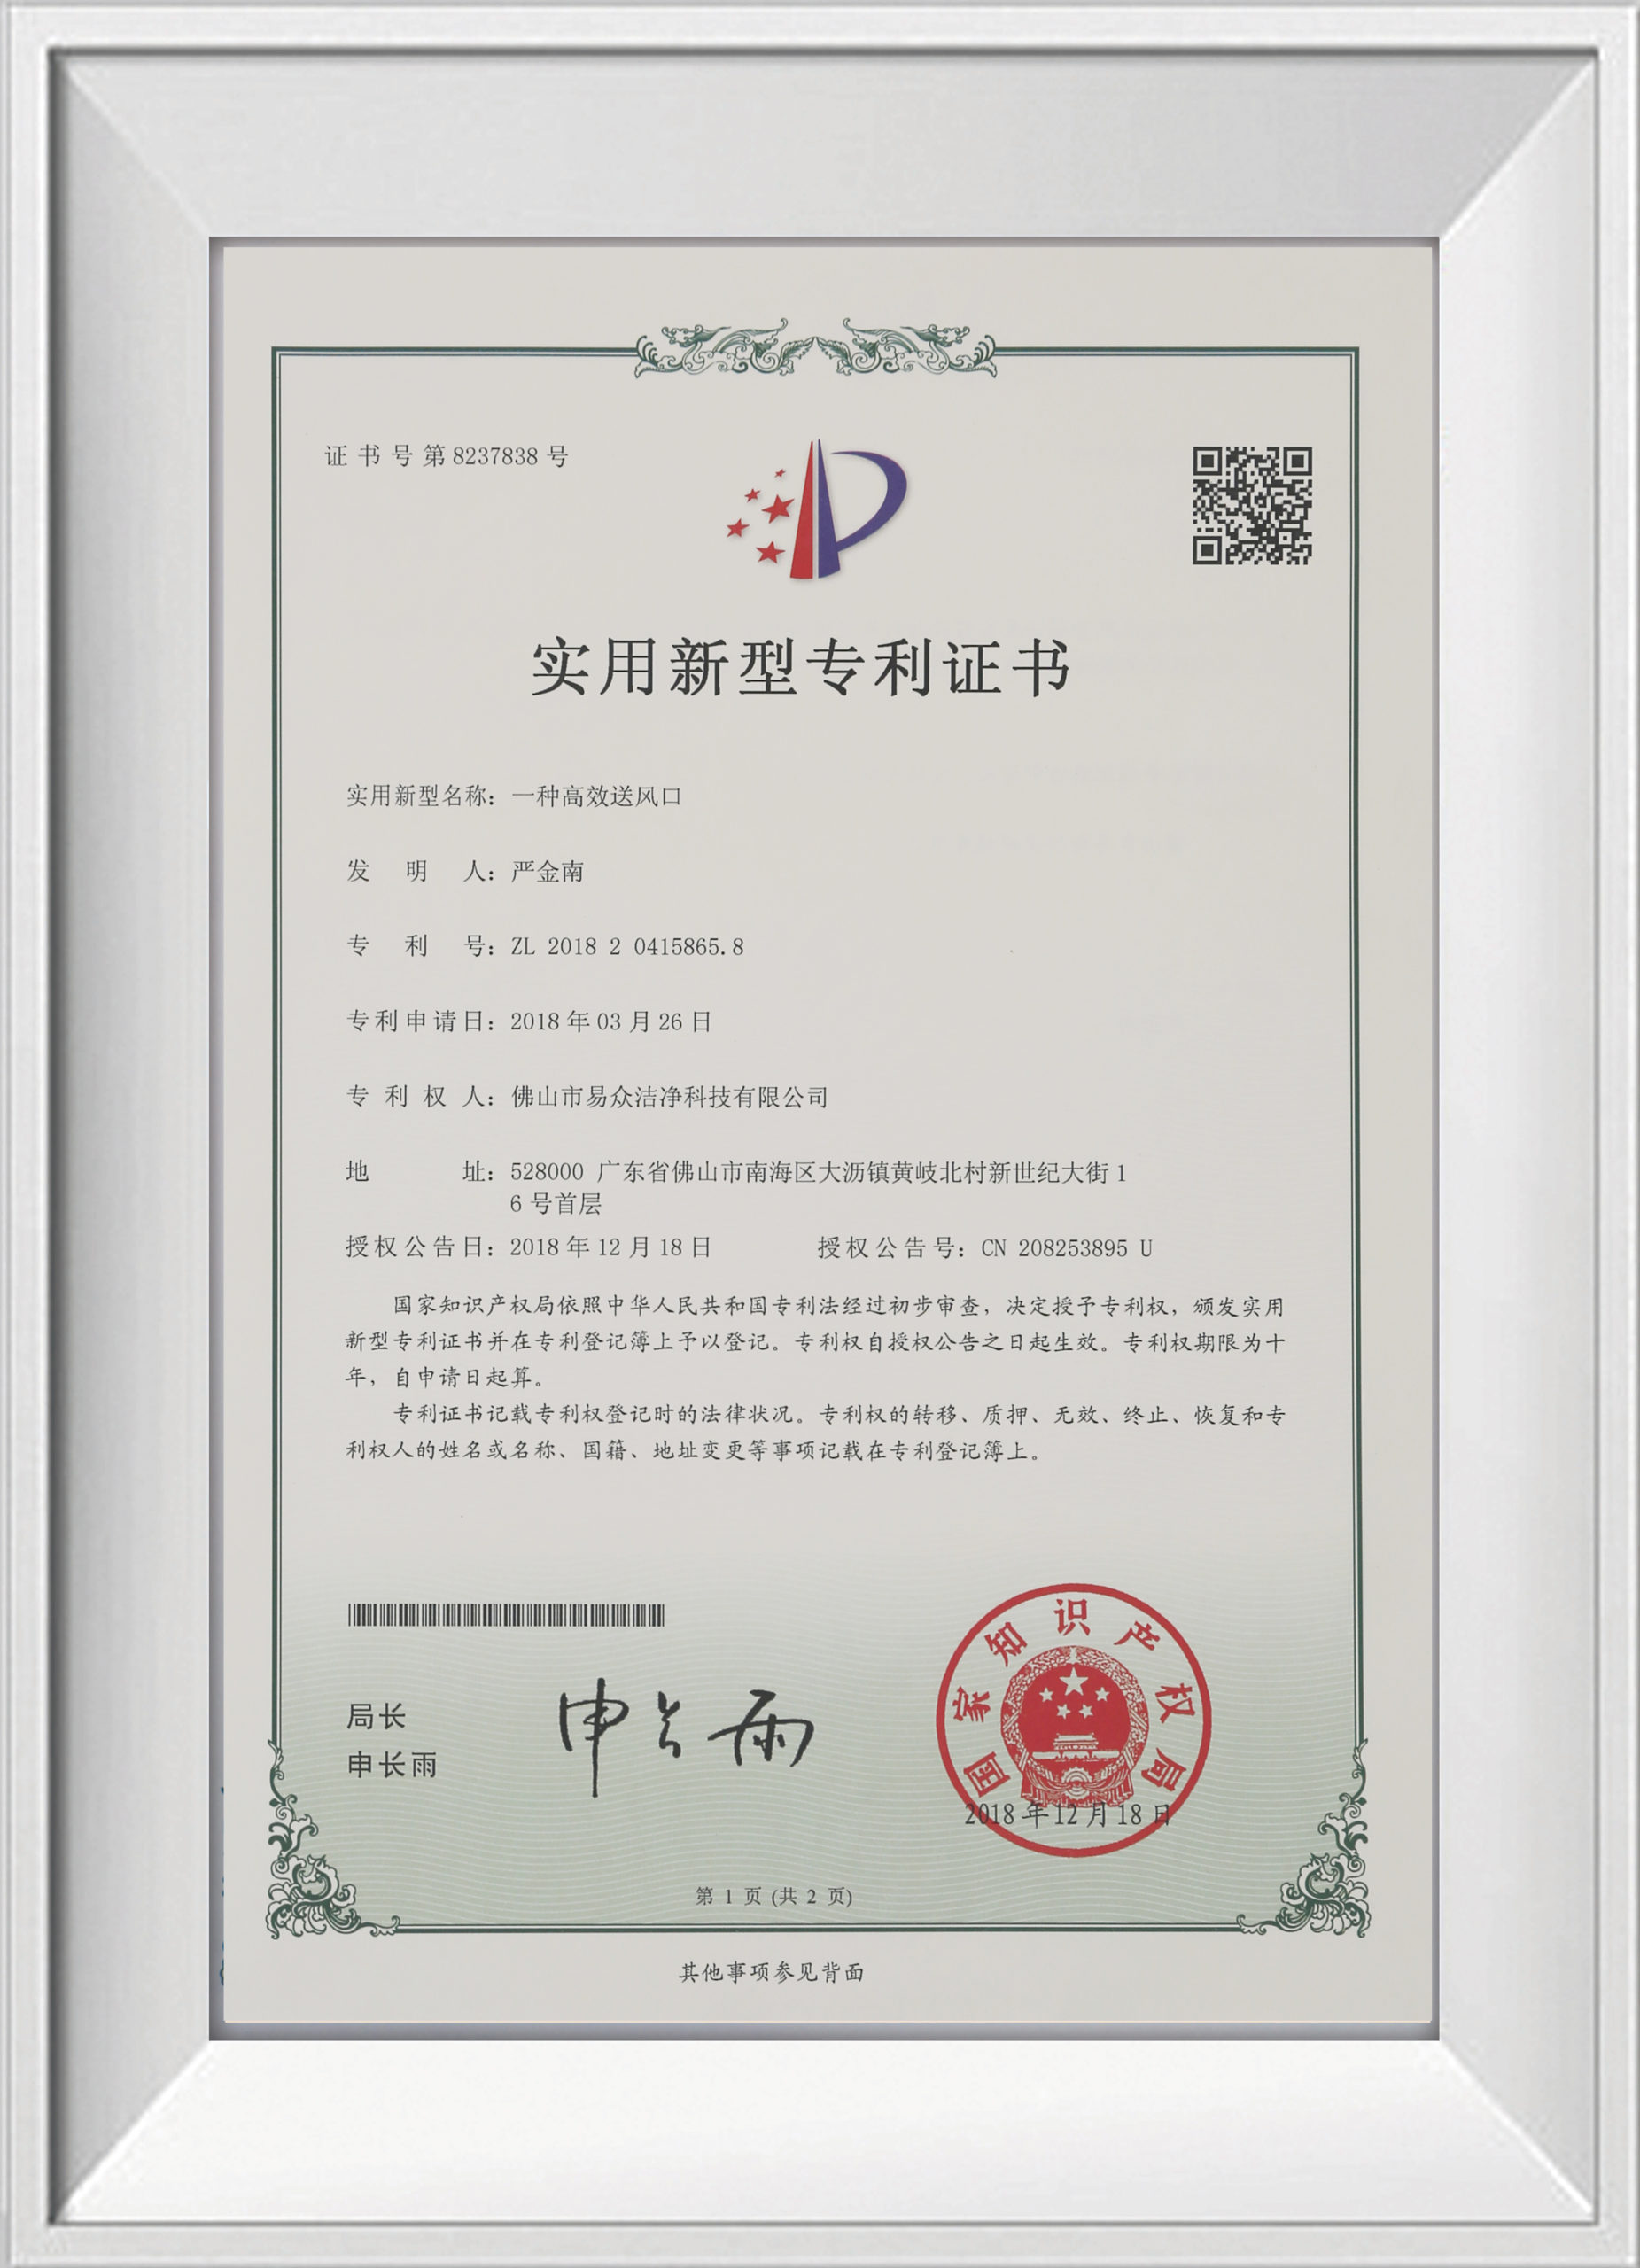 Qualification Certificate 8